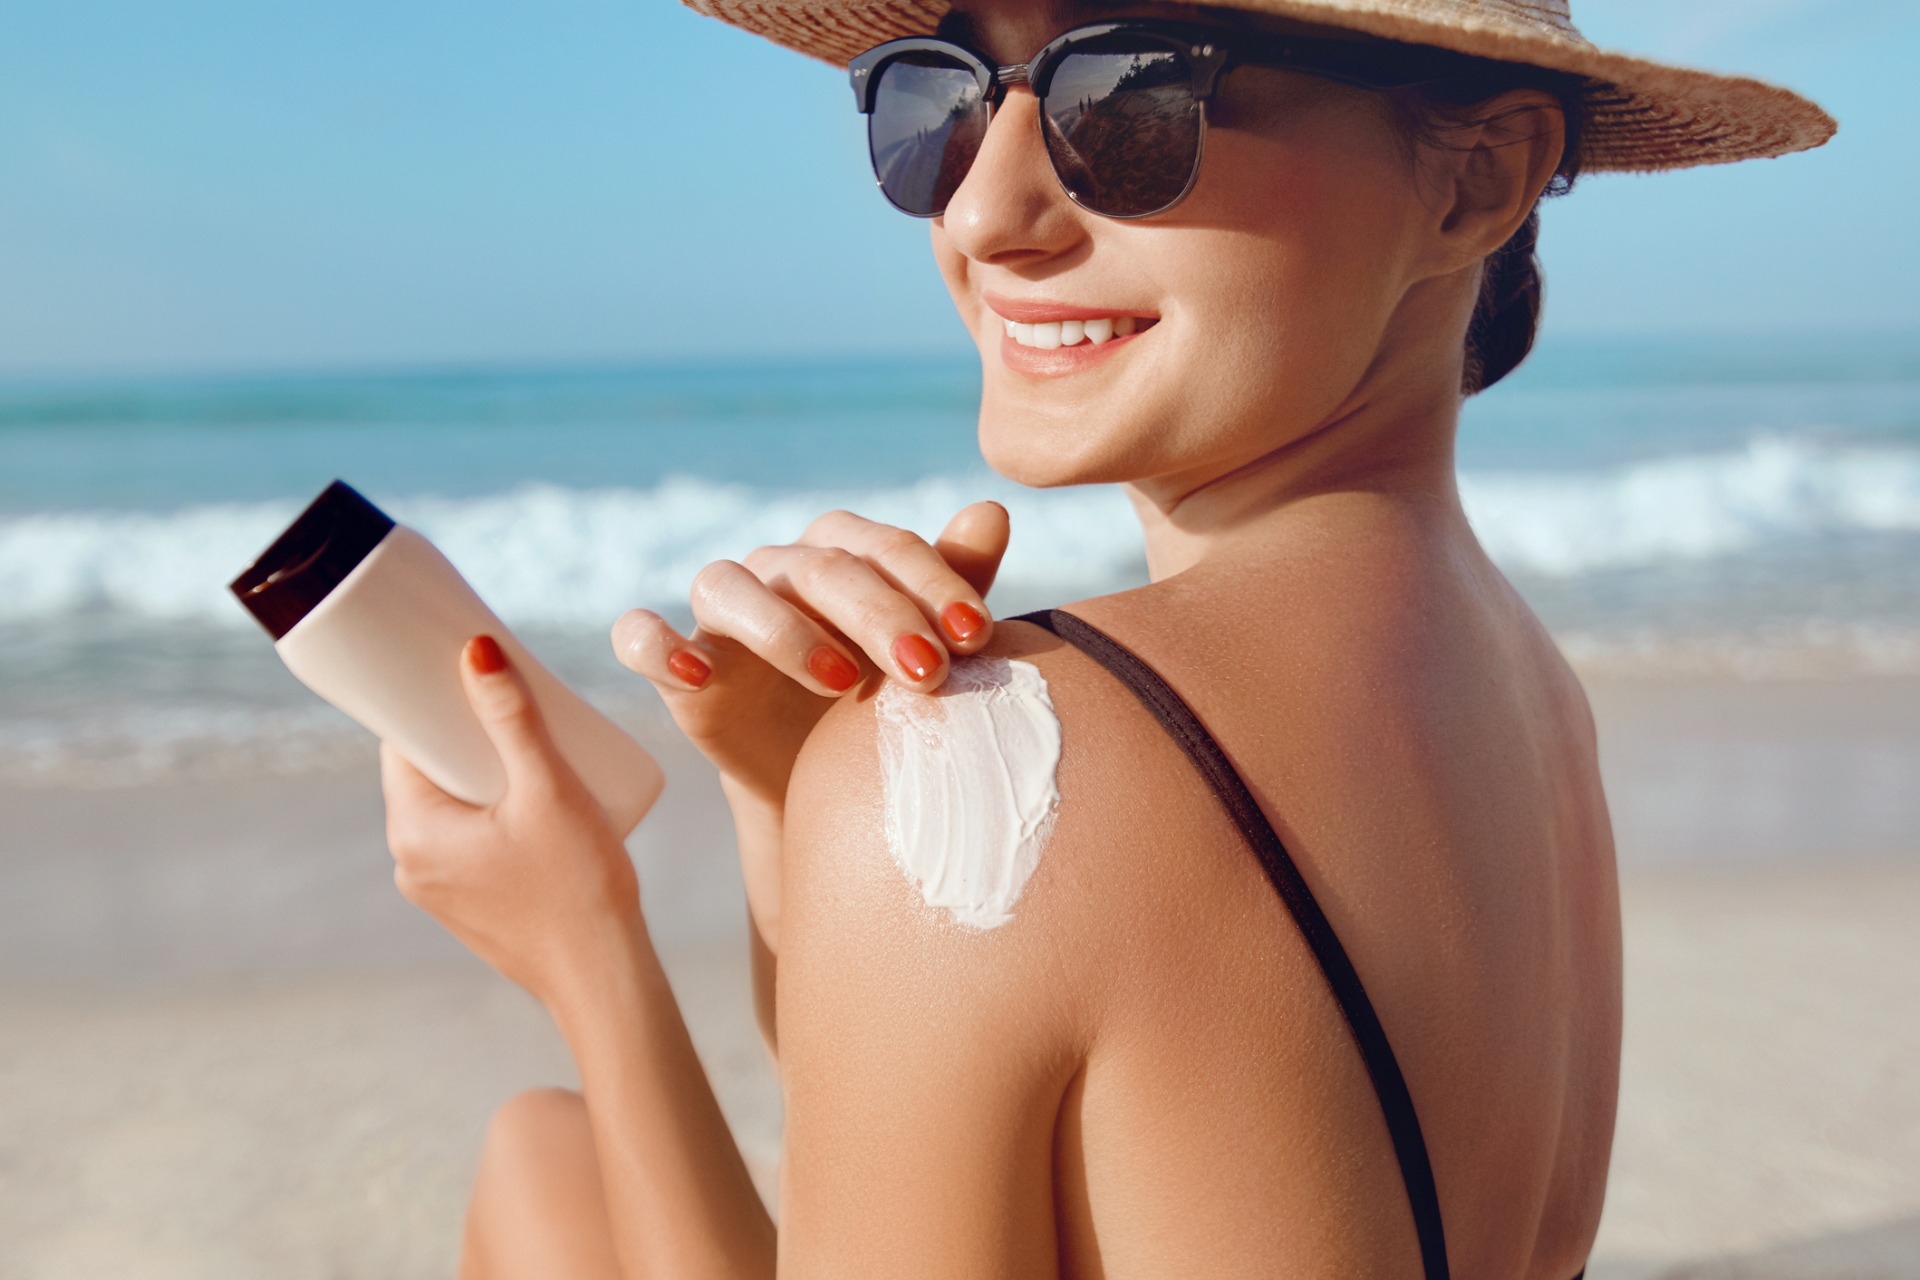 A woman applying sunscreen